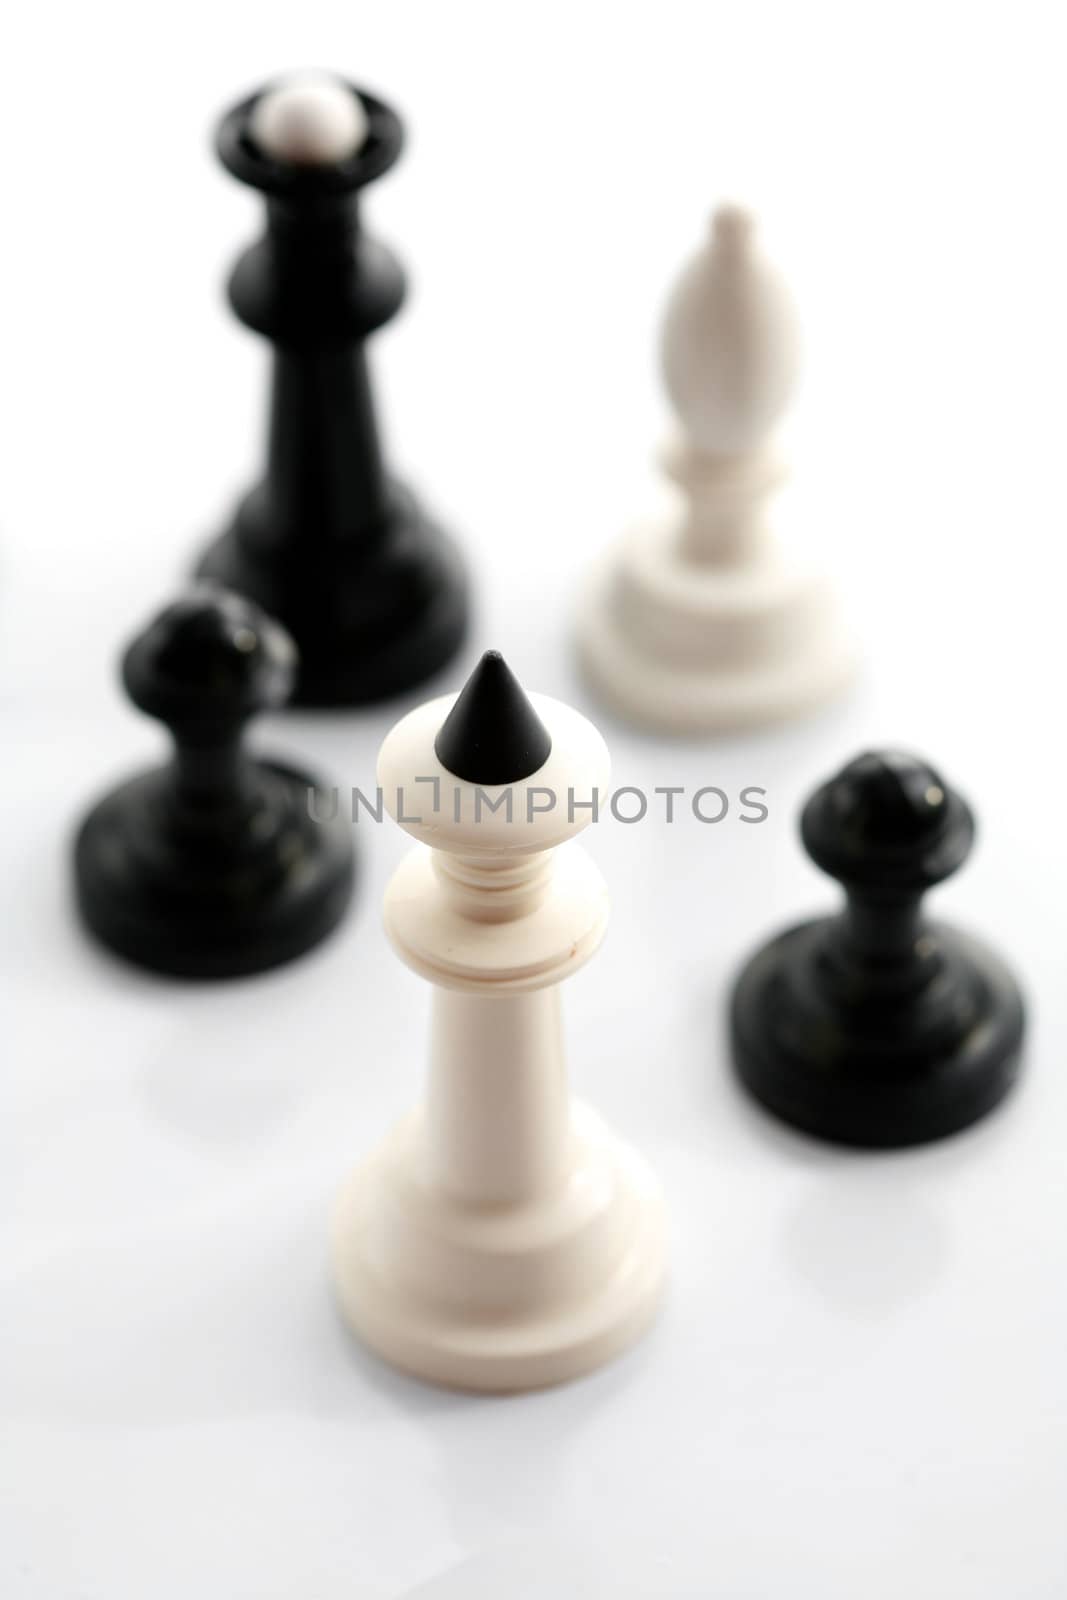 Five chess by velkol